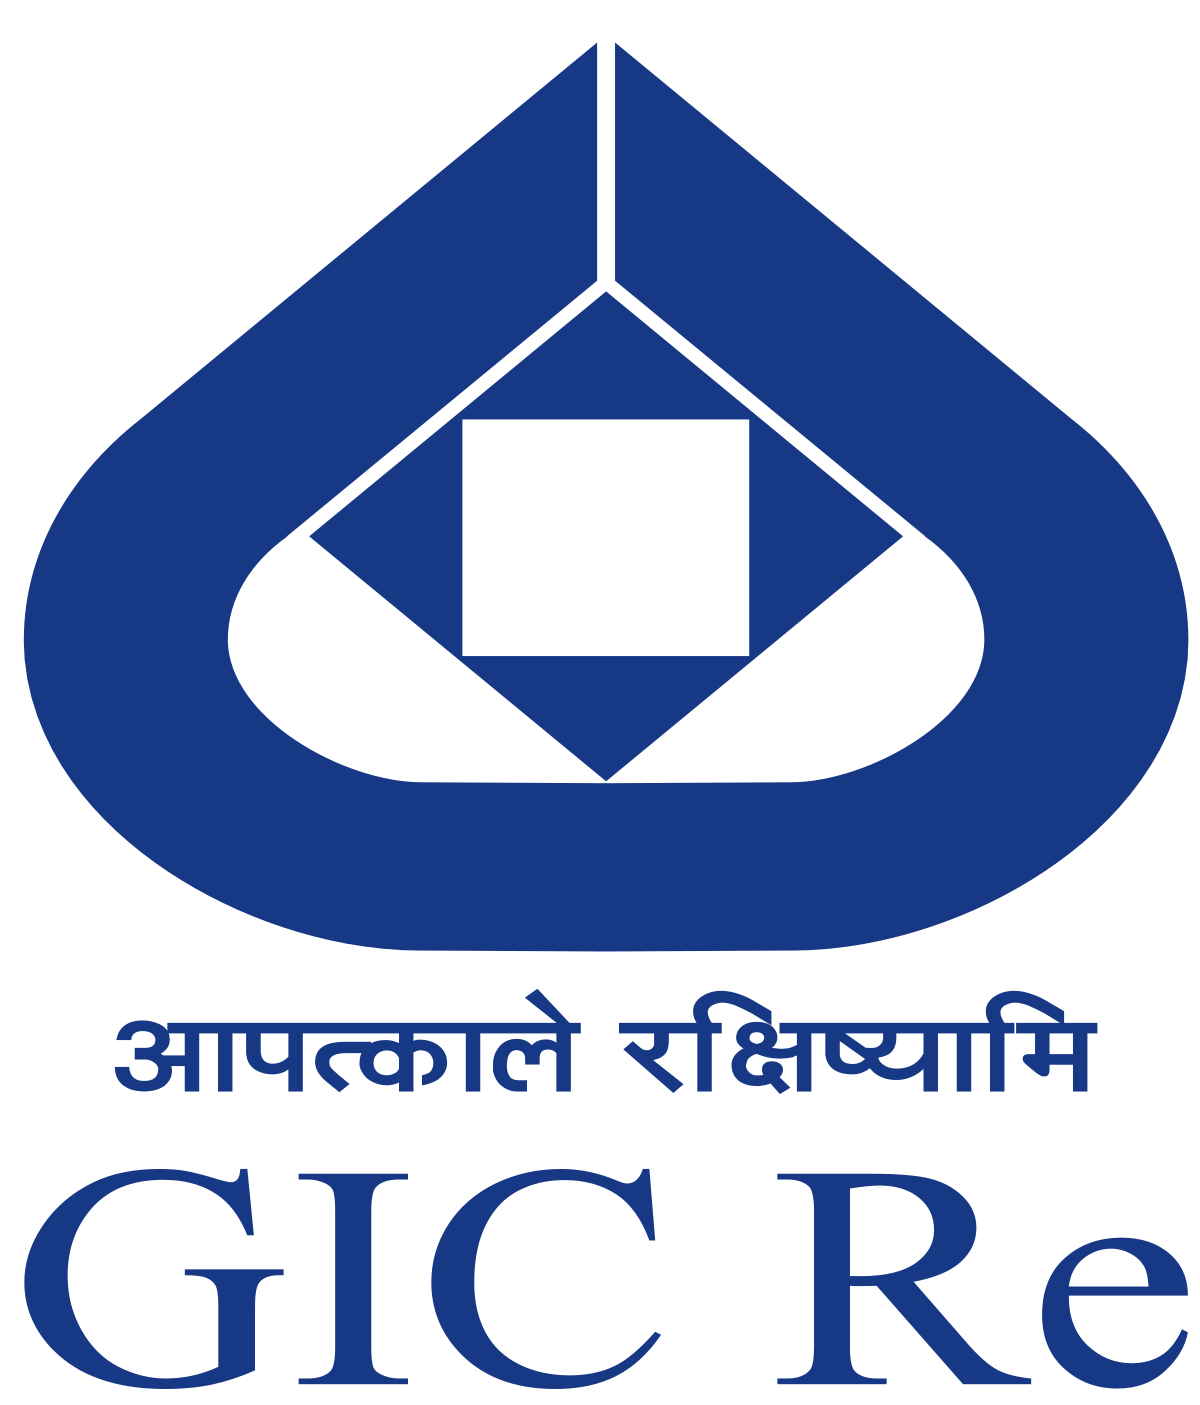 General Insurance Corporation of India - Wikipedia